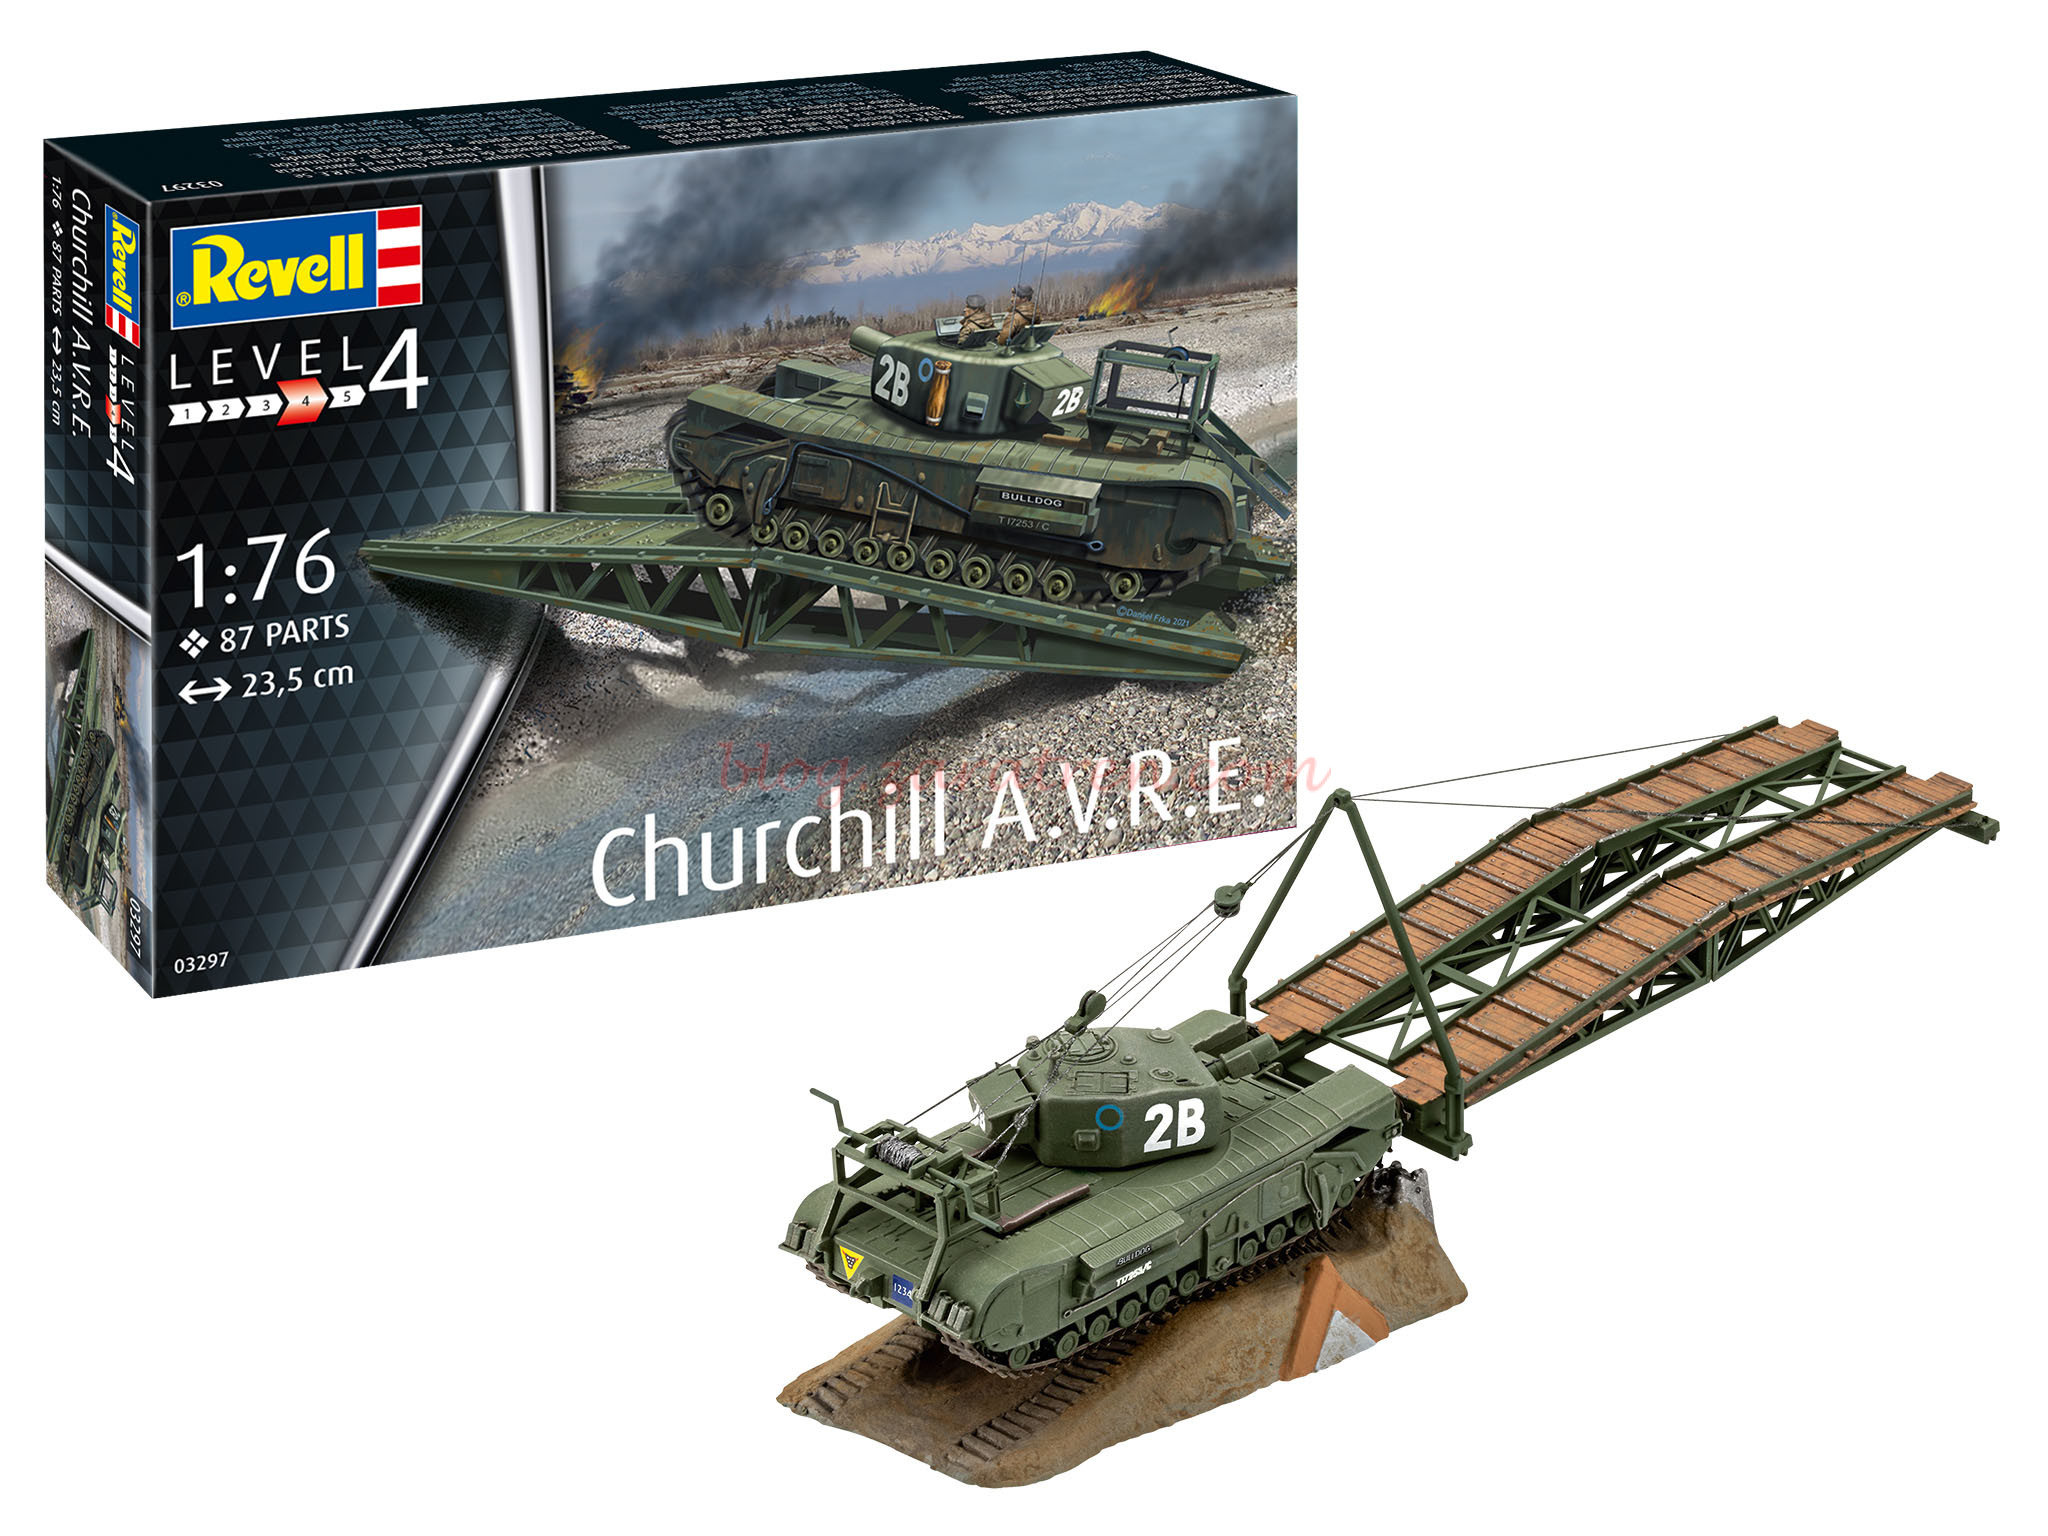 Revell – Tanque Churchill AVRE, Escala 1:76, Ref: 63297